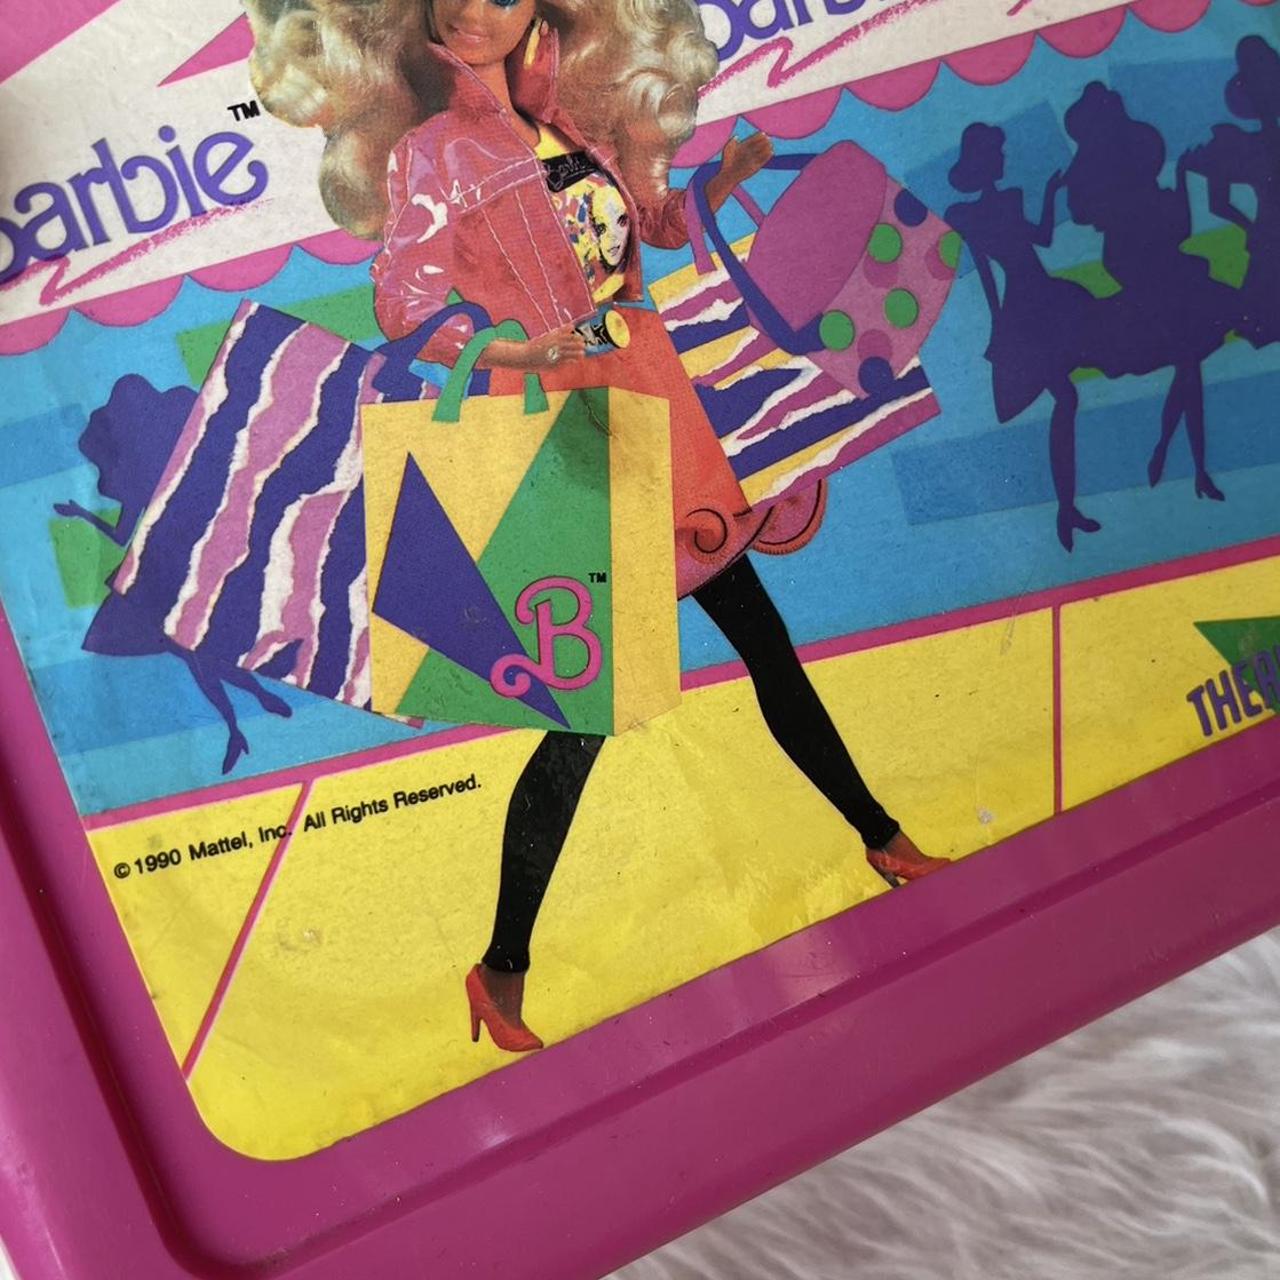 Barbie Thermos Mattel 1990 